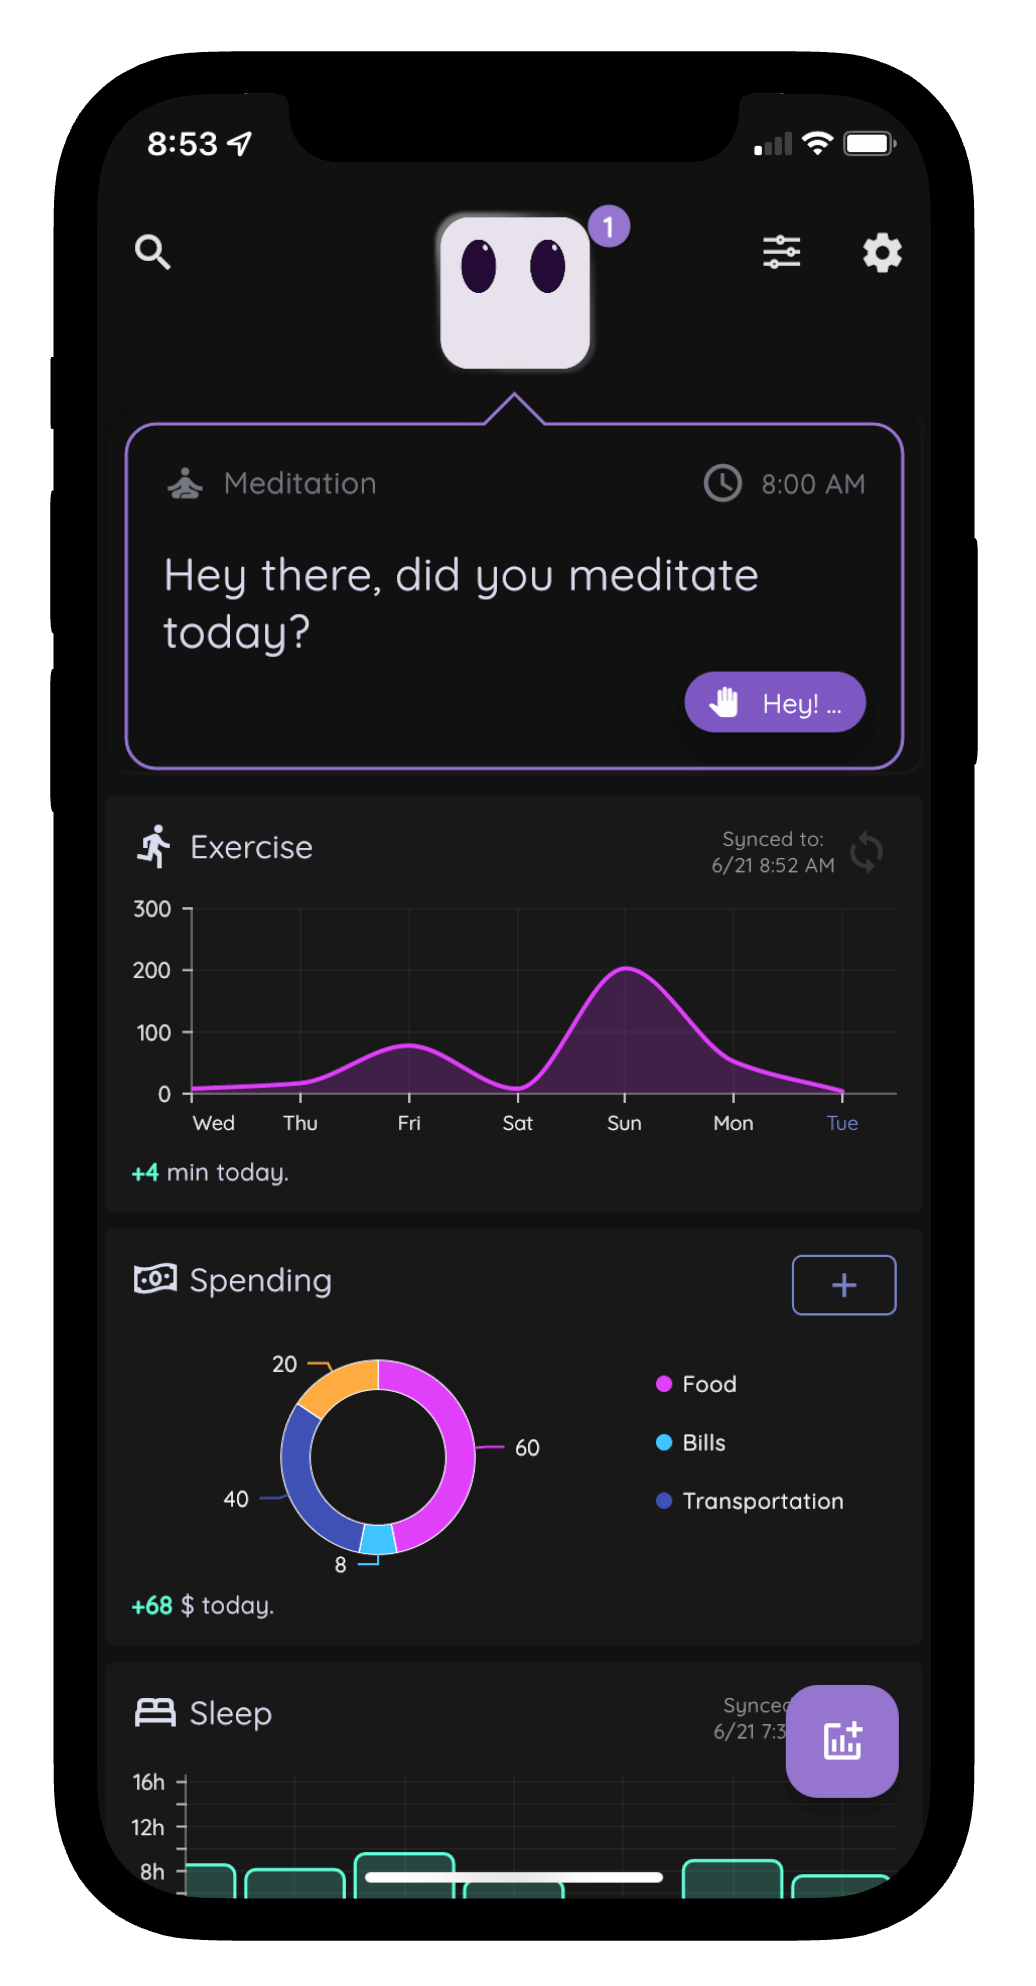 Habit tracker app dashboard with meditation tracker, exercise, sleep, and finance chart